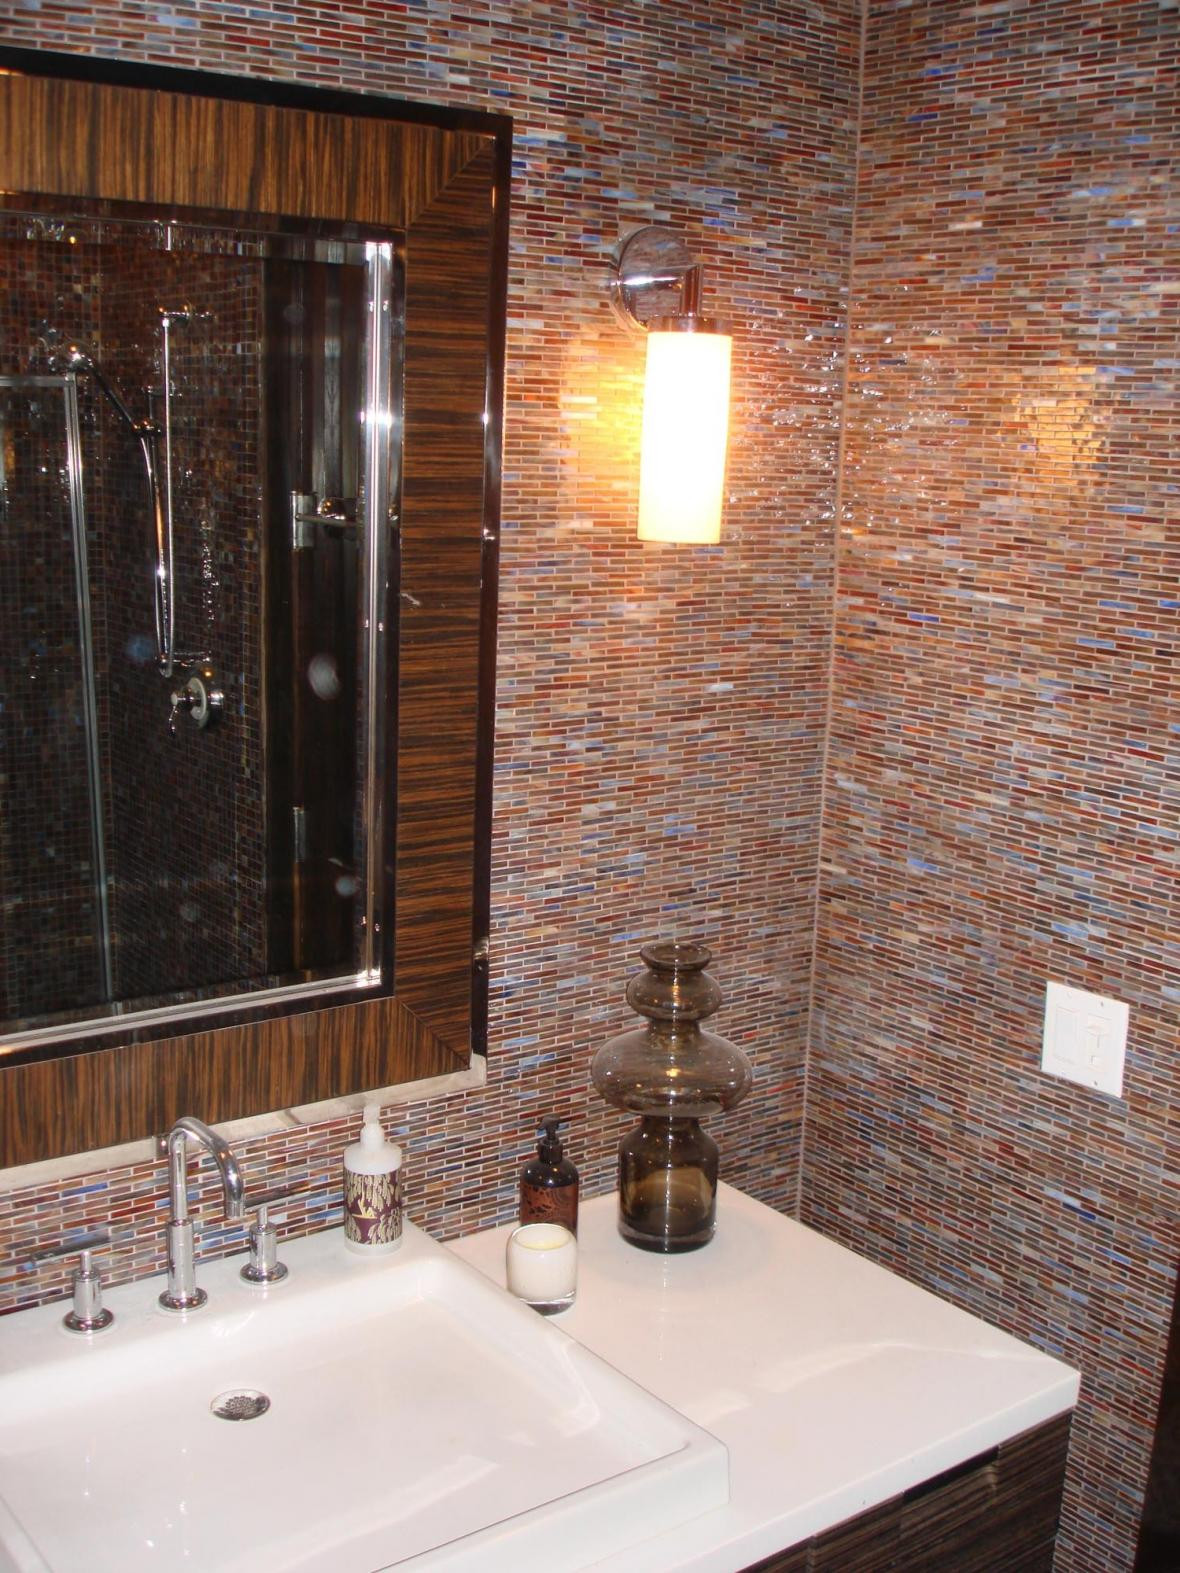 Bathroom Tile Walls
 Glass mossaic tile bathroom vanity wall